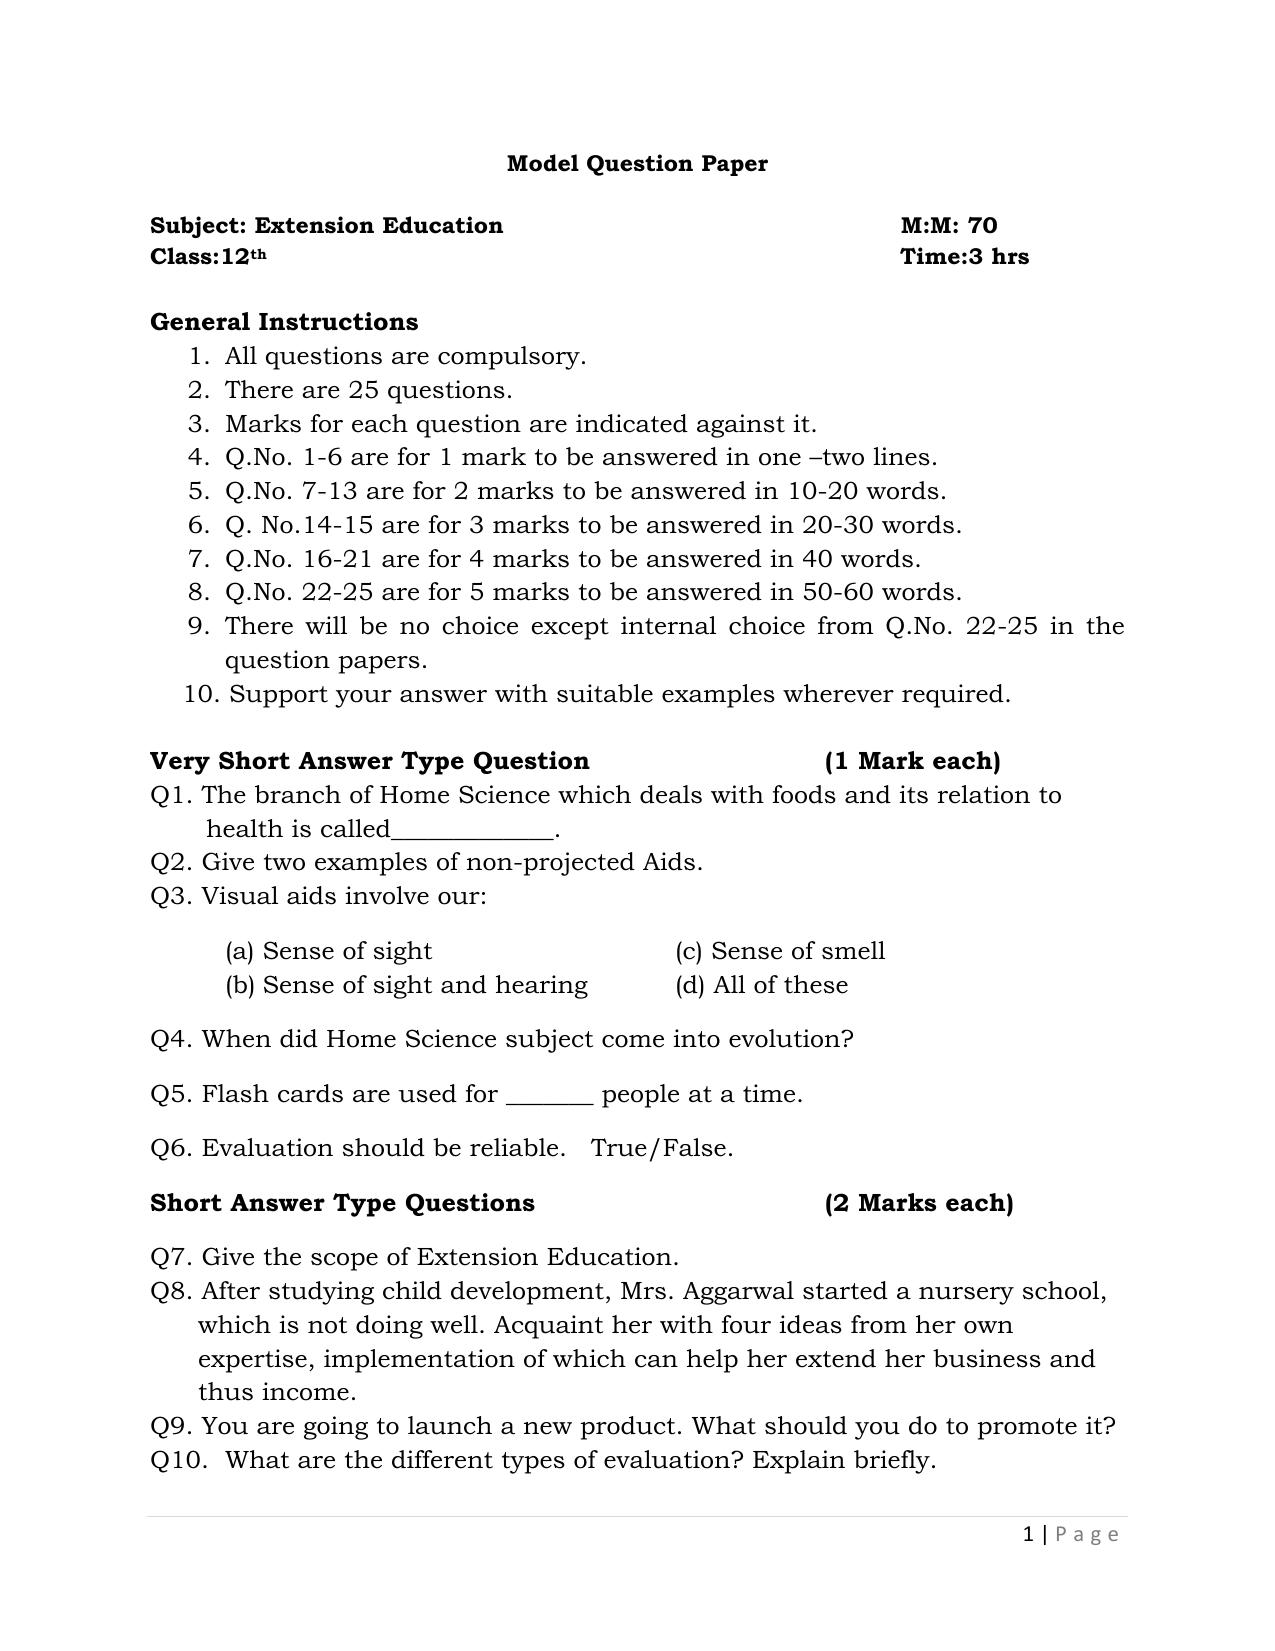 JKBOSE Class 12 Extension Education Model Question Paper - Page 1